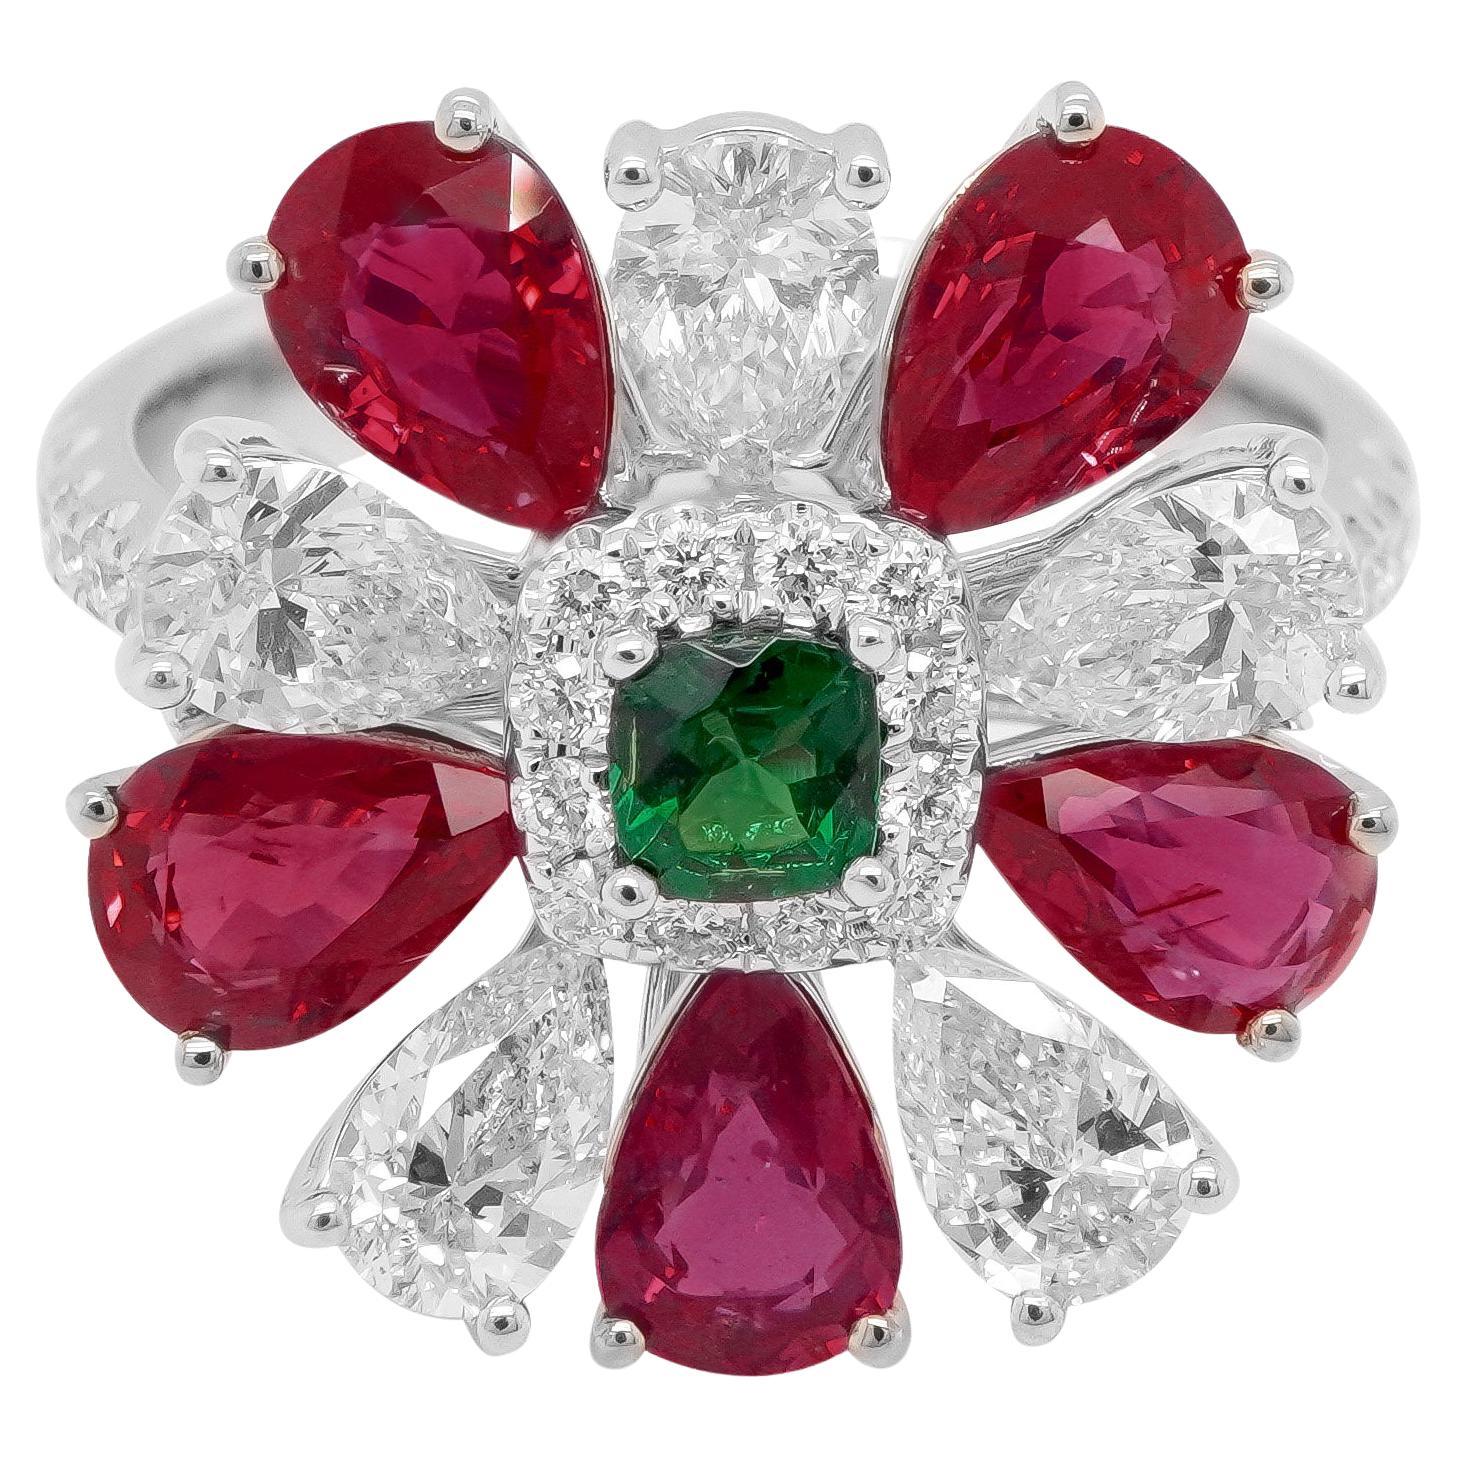 2.55 Carat Vivid Red Ruby & 1.40 Carat White Diamond Statement 18K Ring For Sale